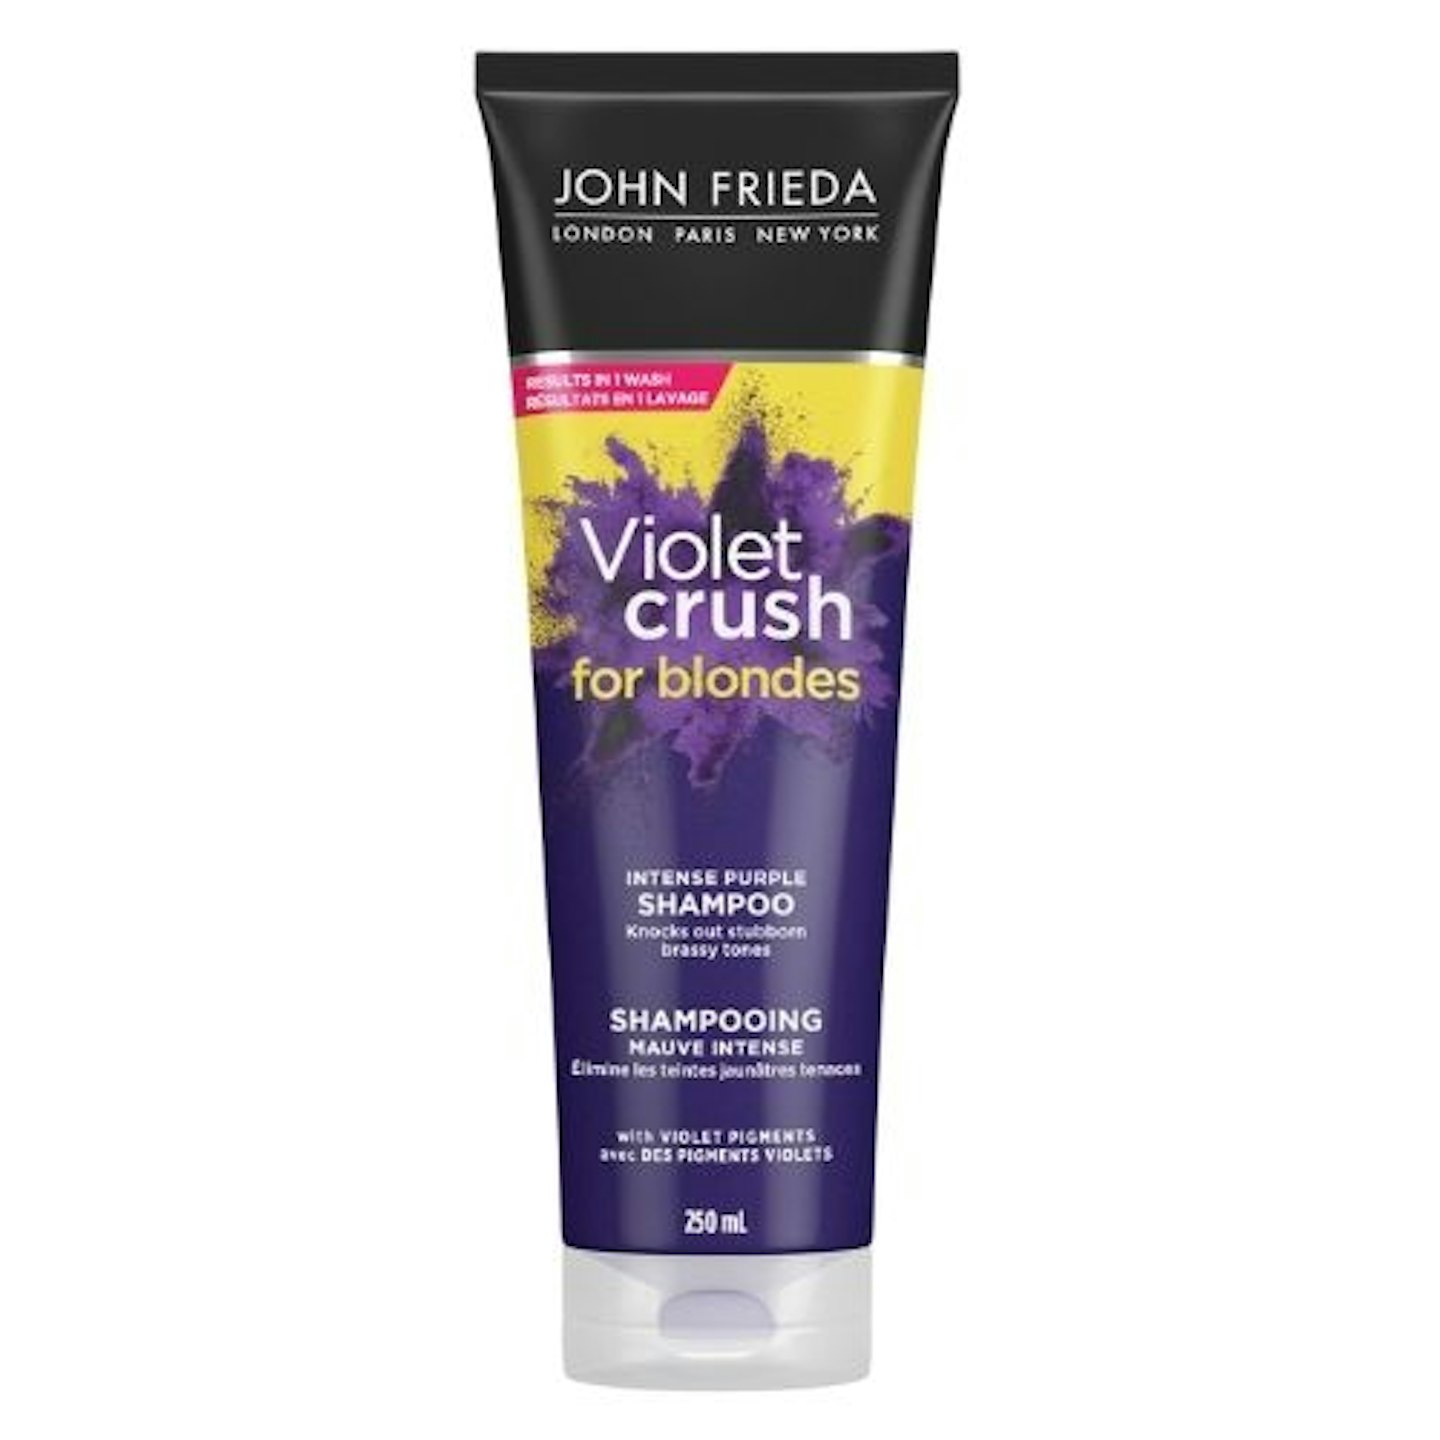 offer John Frieda Violet Crush Intensive Purple Shampoo, £7.99